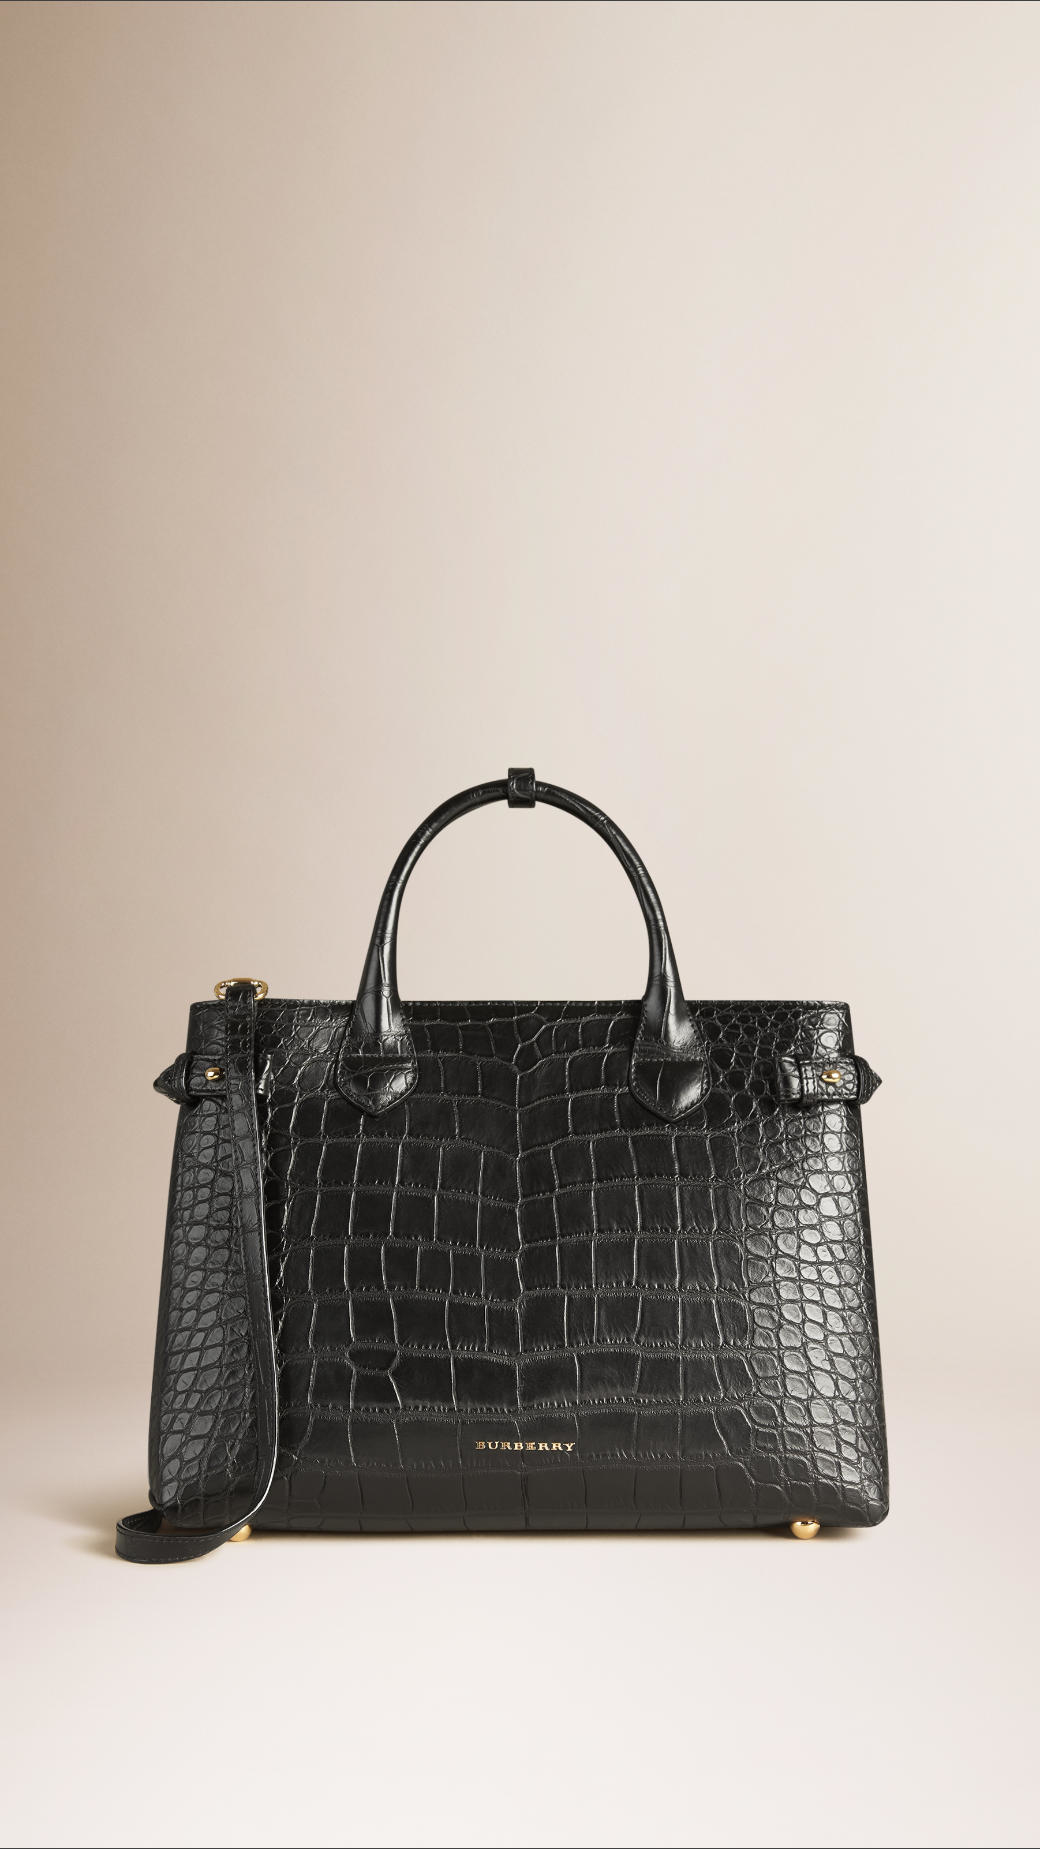 Burberry Leather The Medium Banner Alligator Bag in Black - Lyst